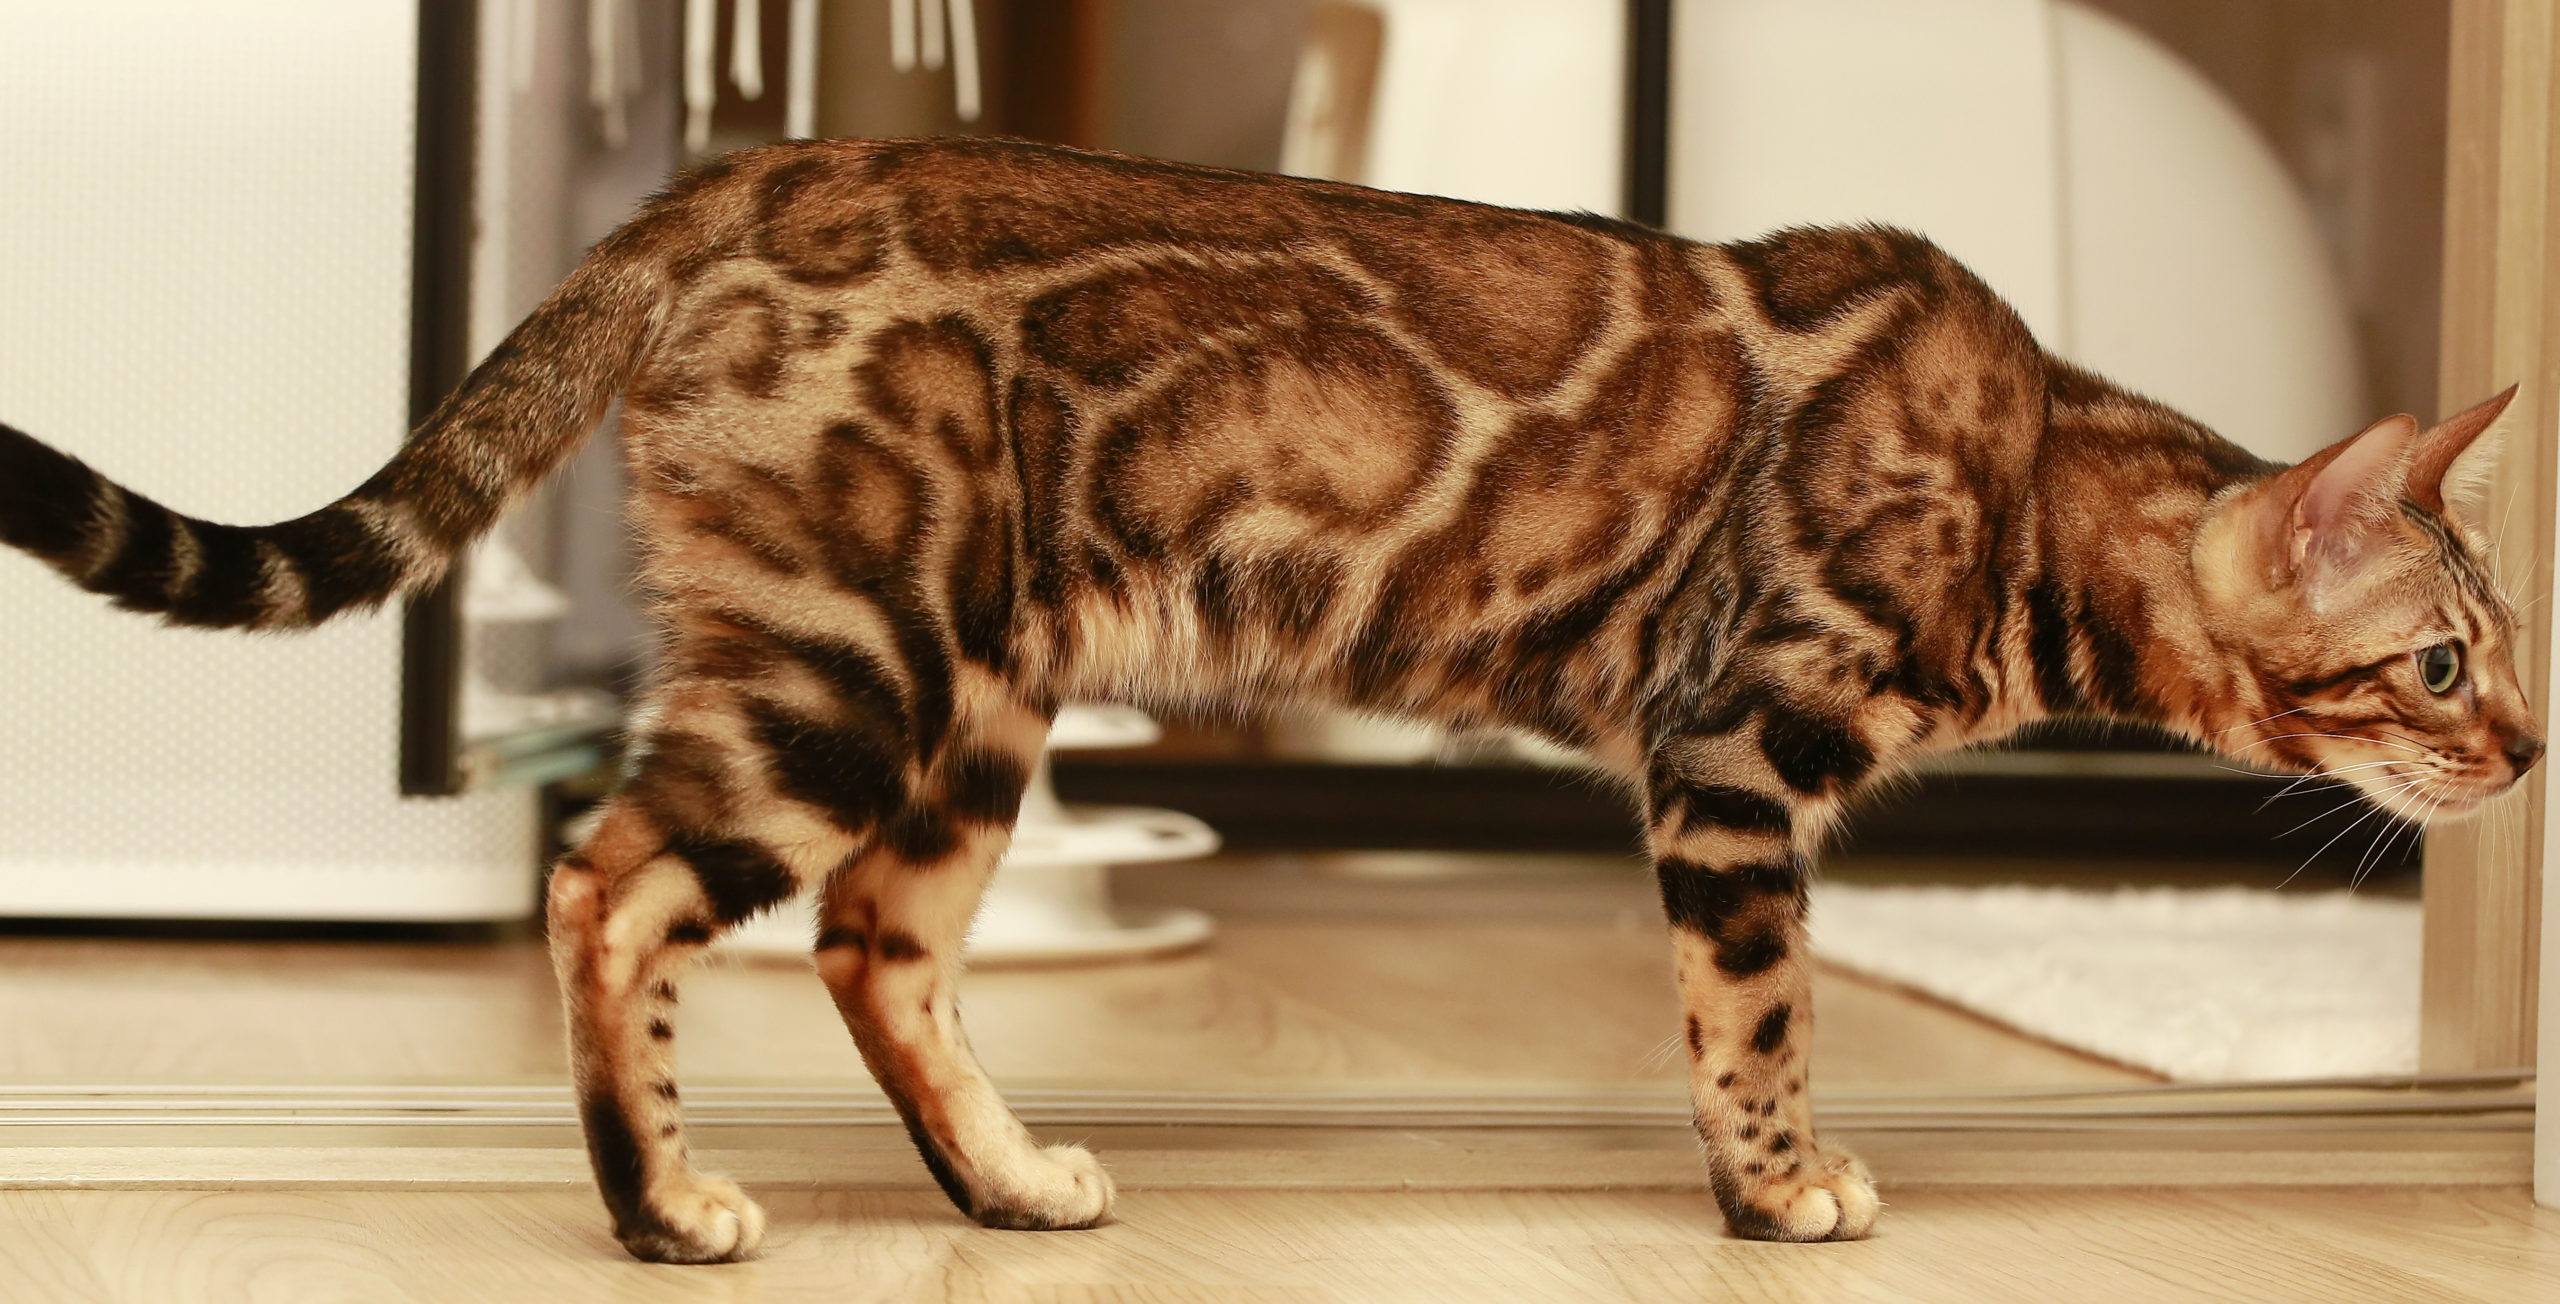 Хорошая кошка бенгальская. Бенгальская кошка. Кот породы бенгал. Бенгальская леопардовая кошка. Бенгальский кот Кашмир.